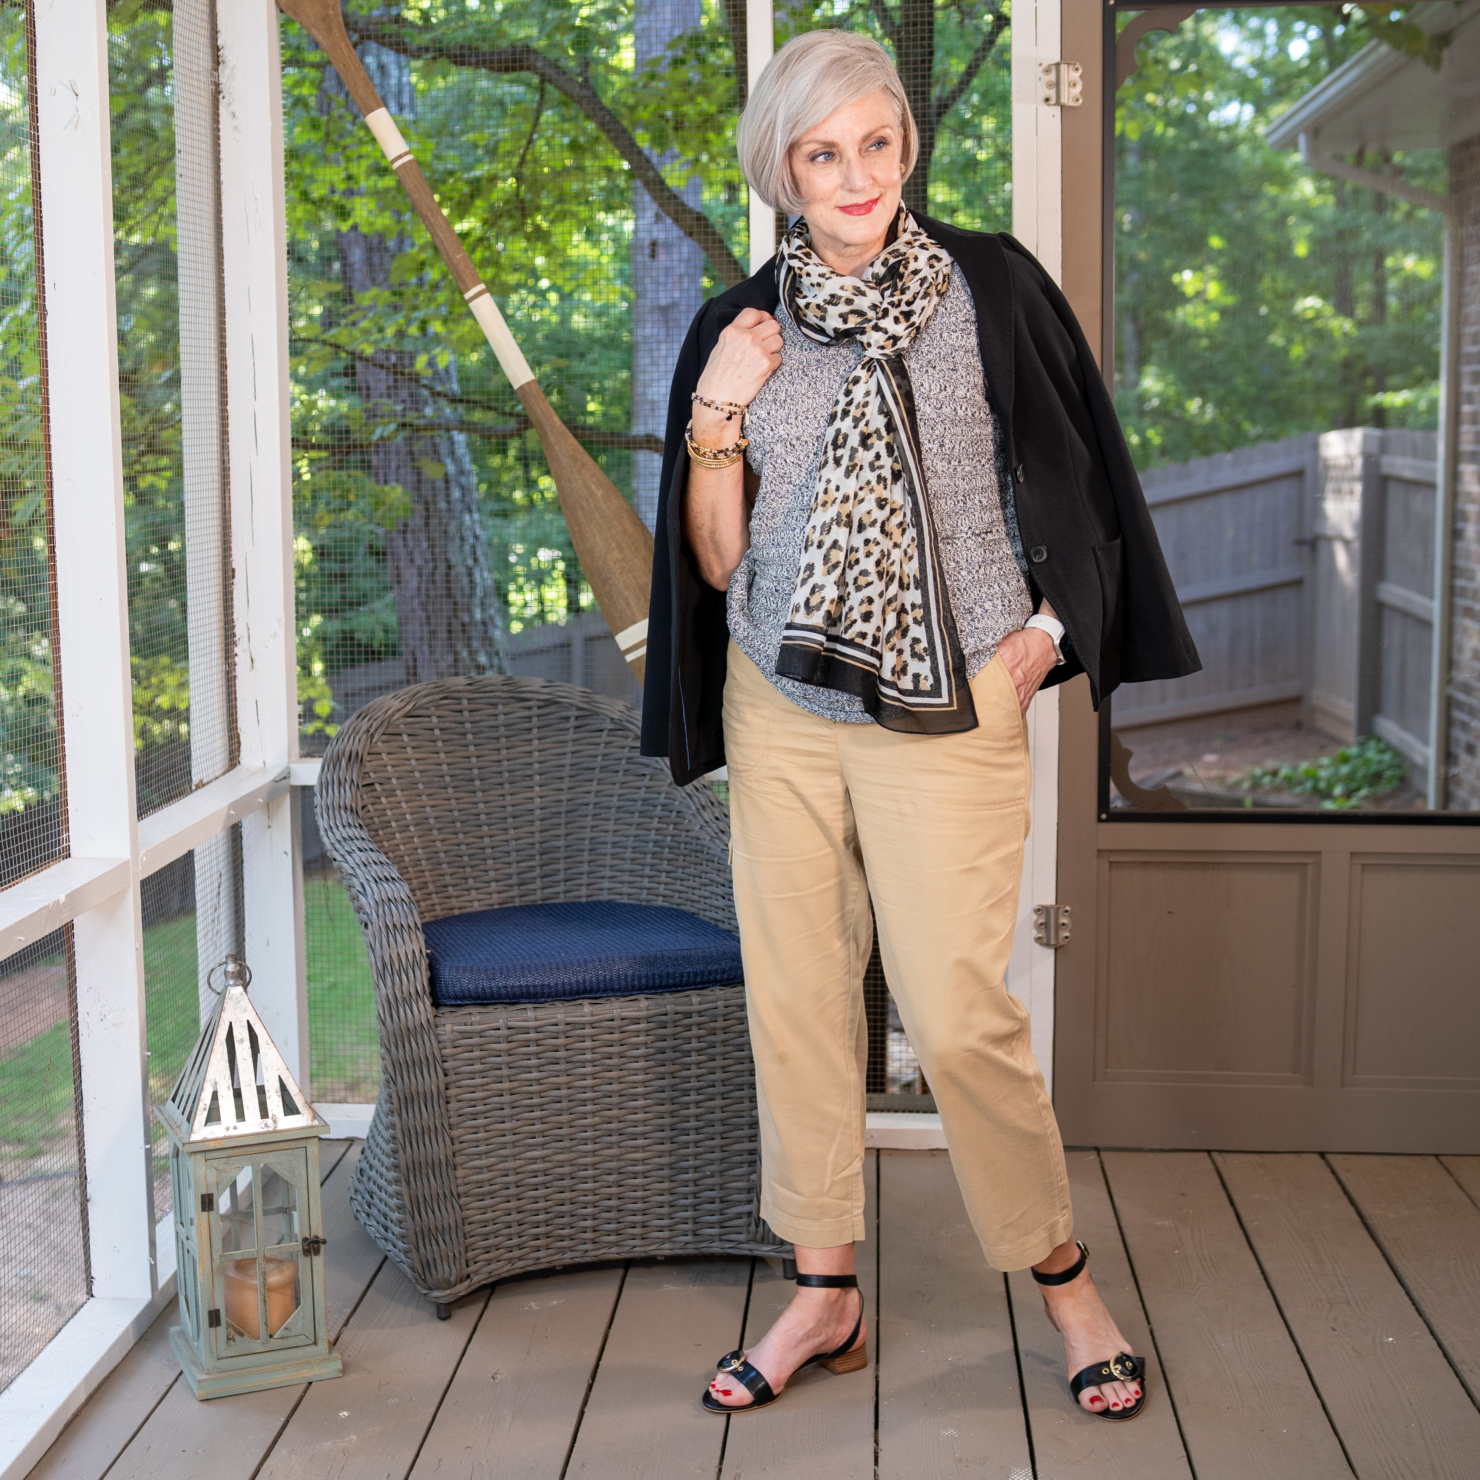 How to style summer cargo pants 2 ways: fashion sustainability